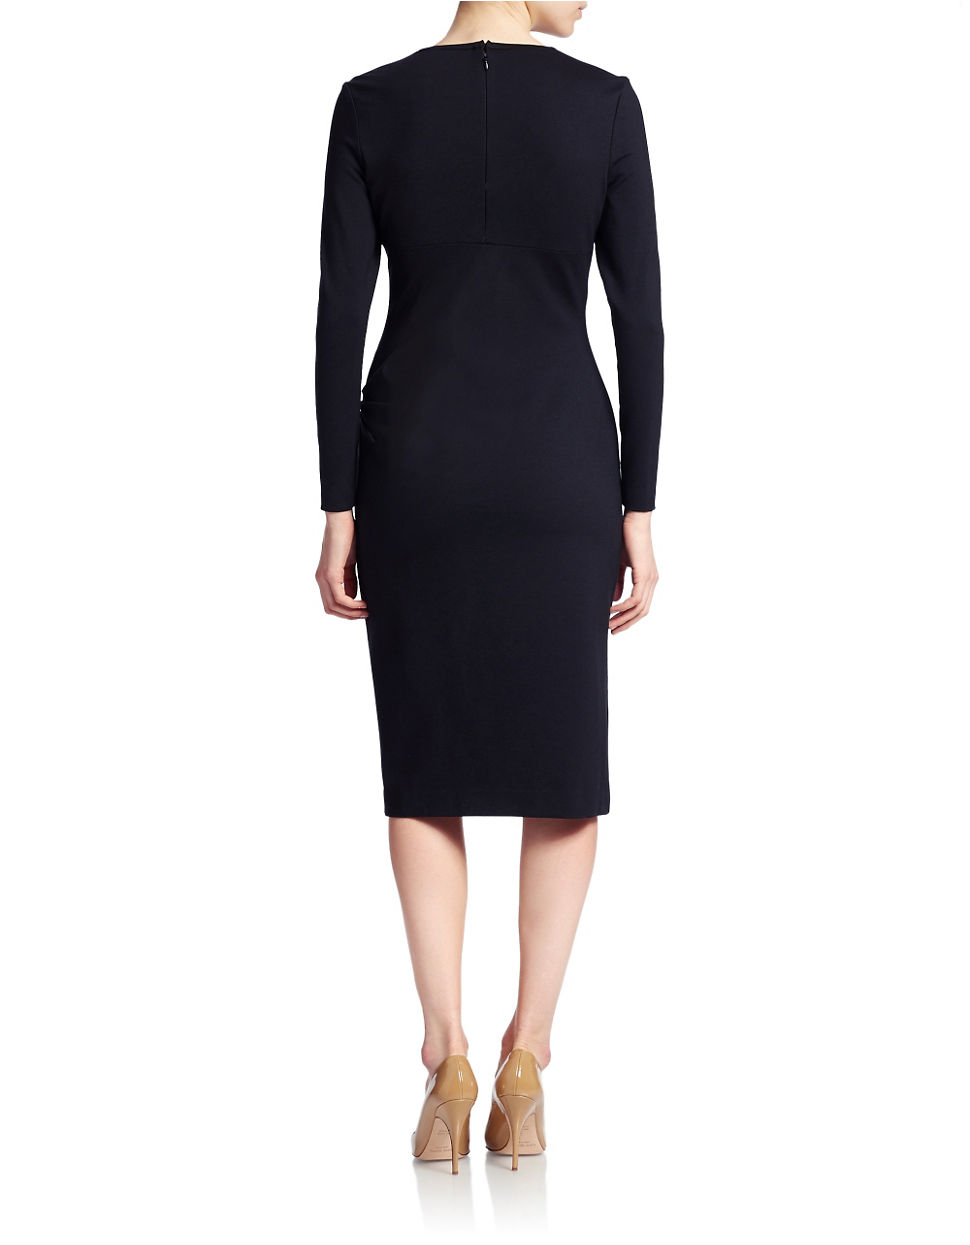 Lyst - Anne Klein Ruched Side Sheath Dress in Black